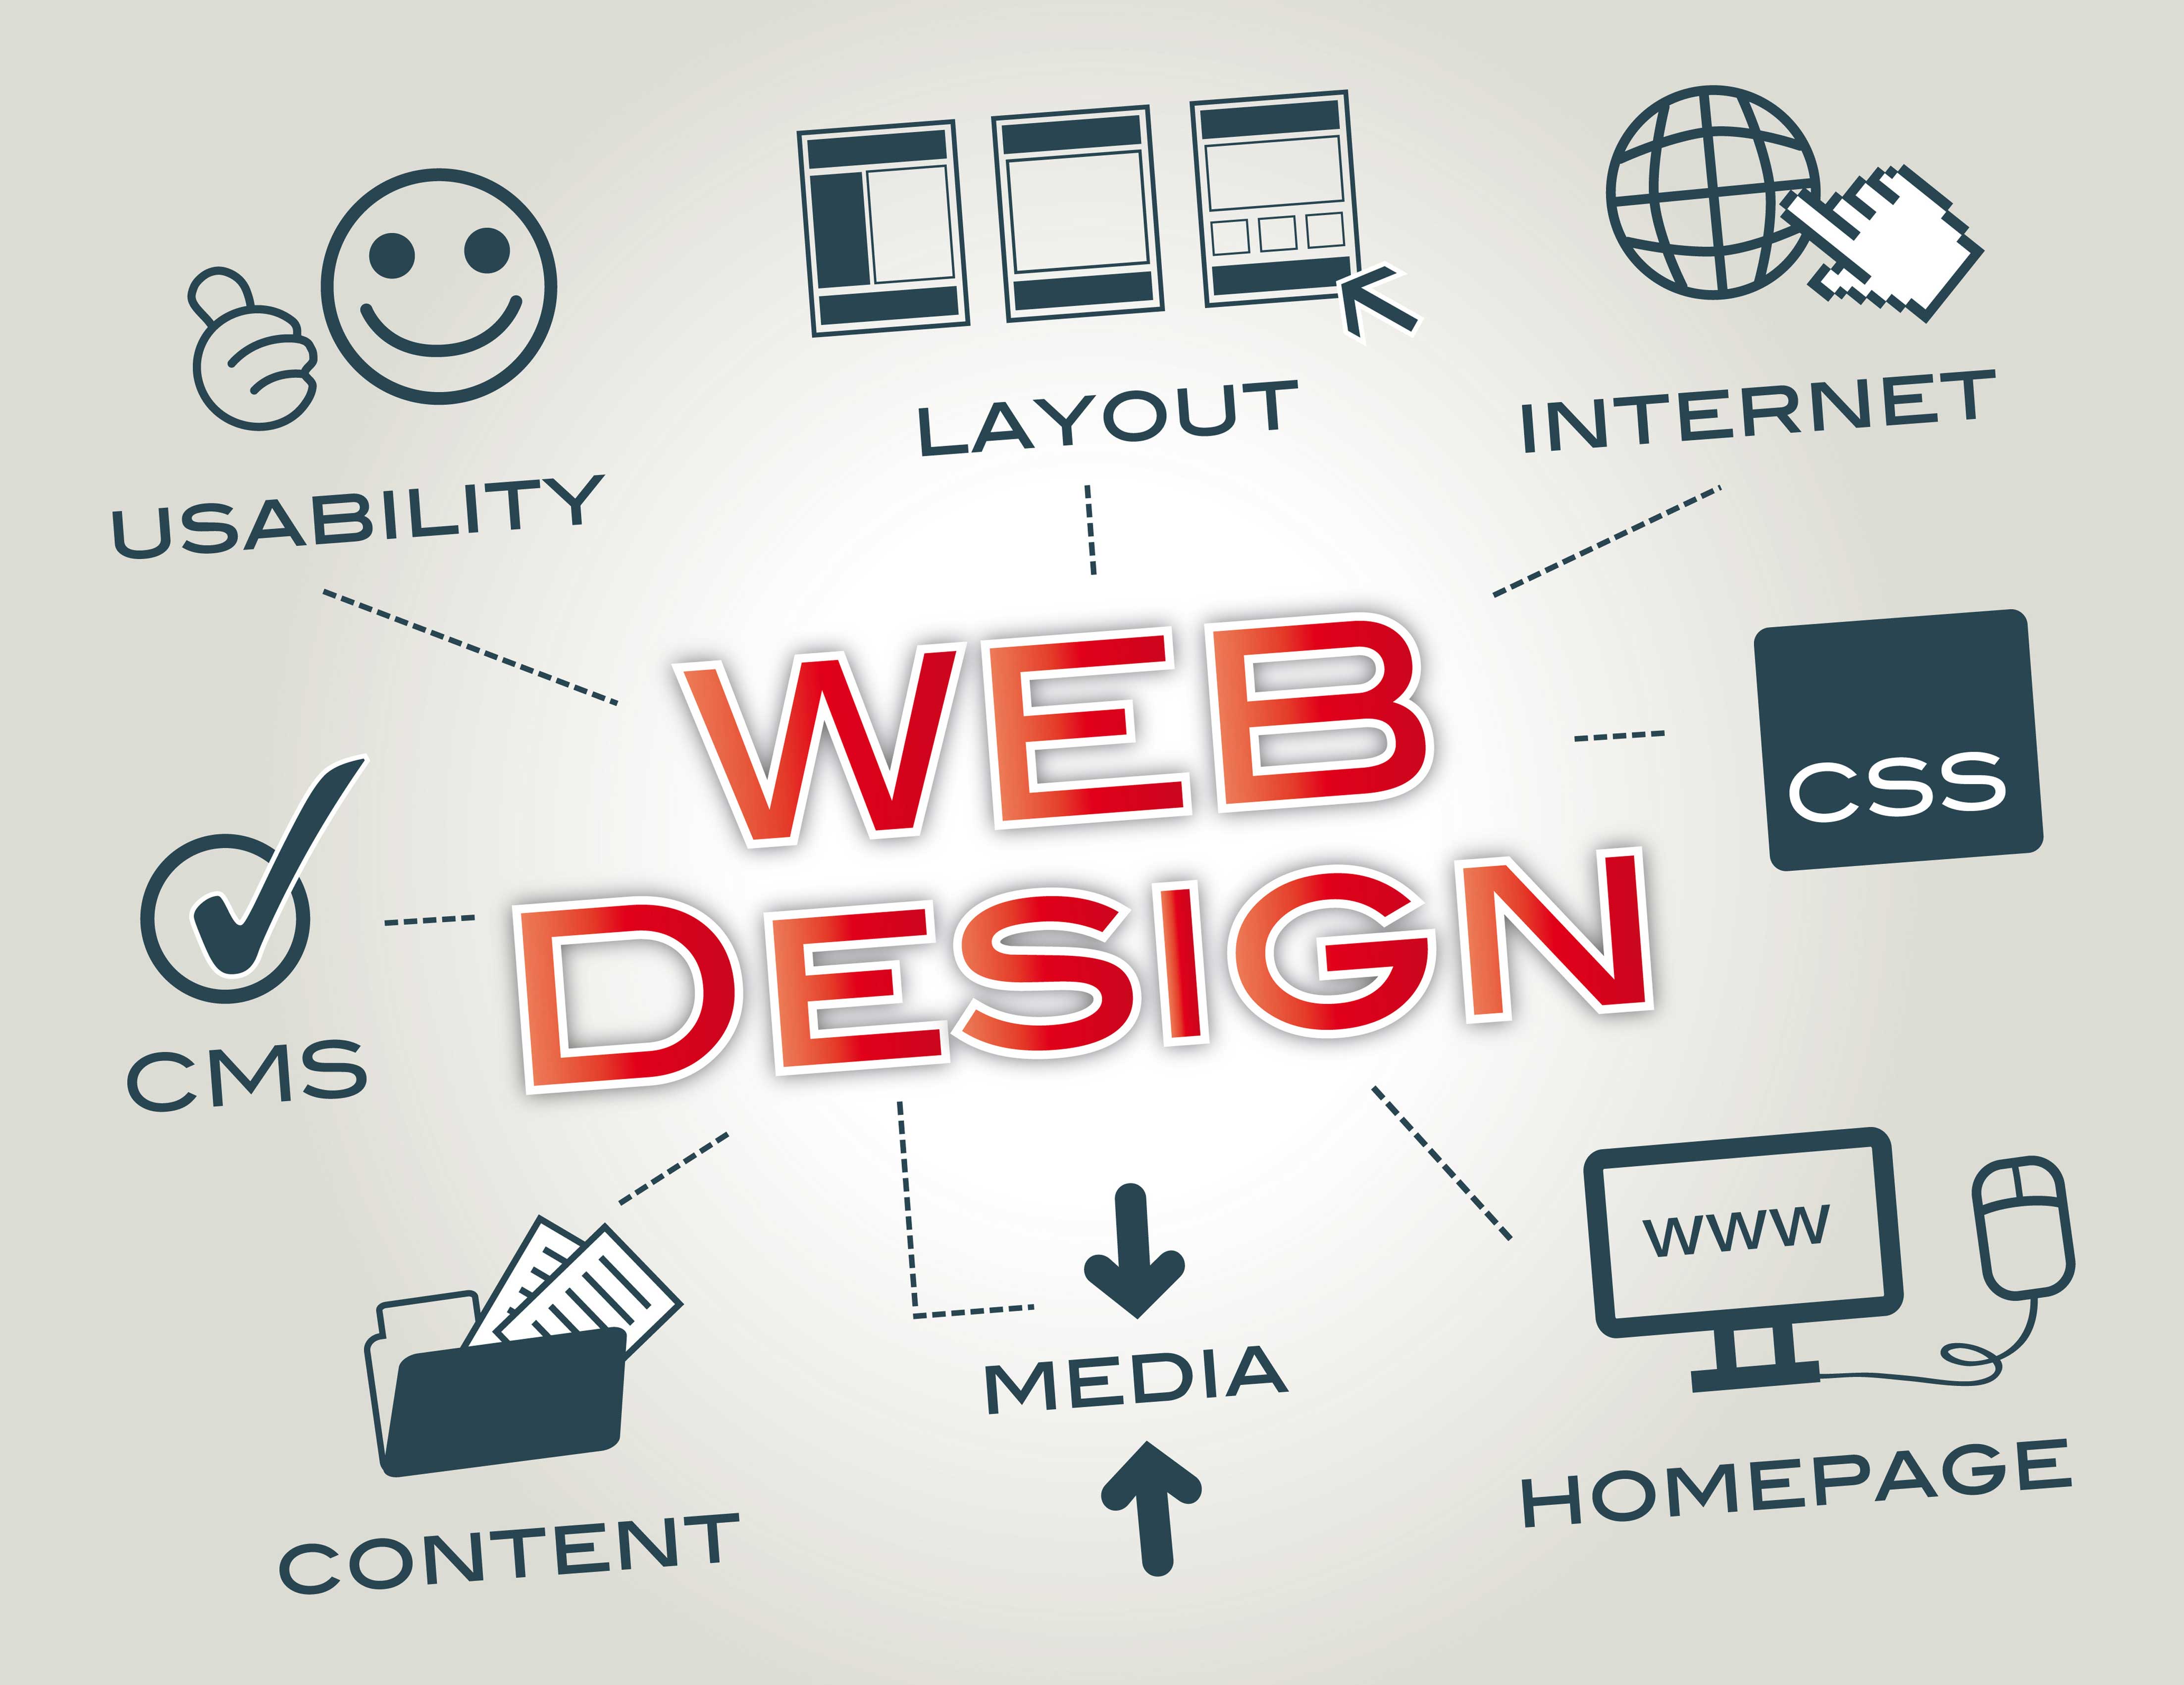 webdesign innovant pour solutions e commerce